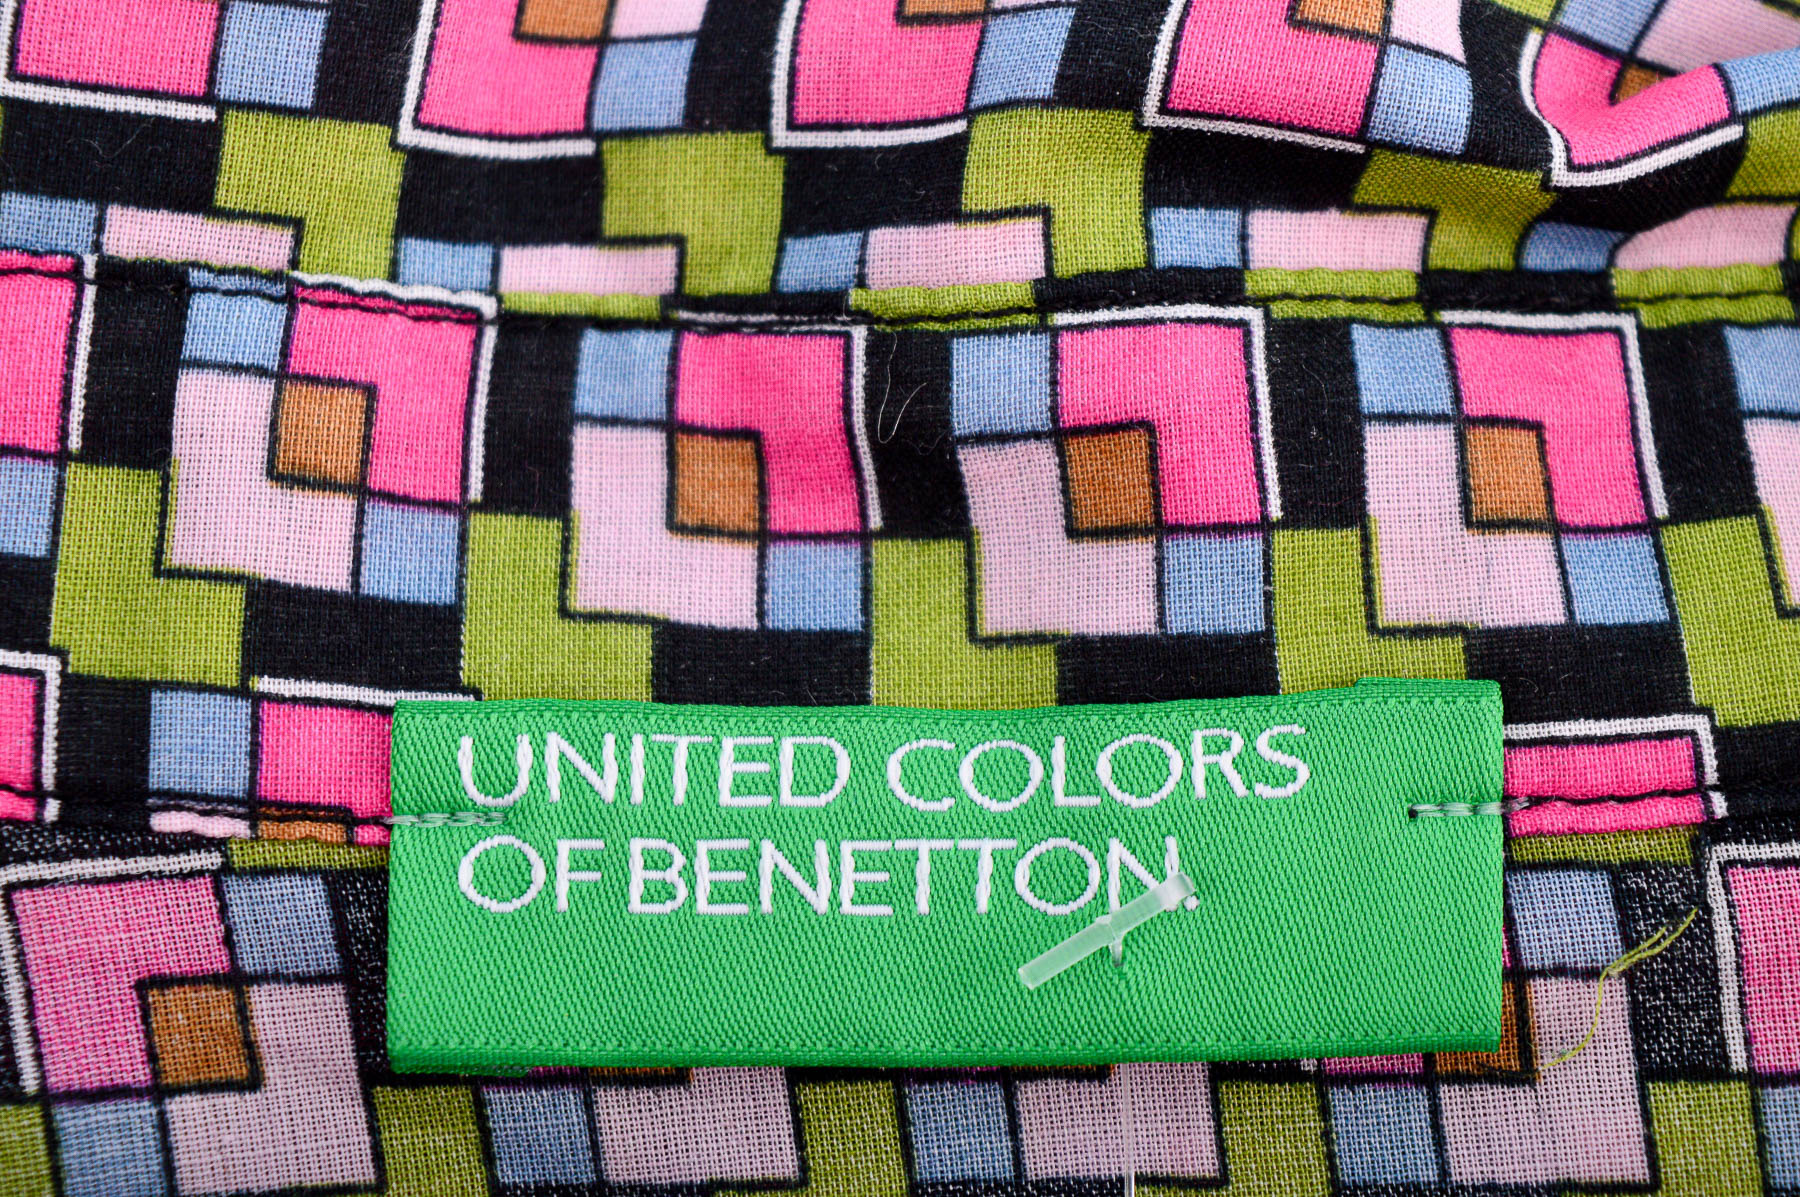 Women's shirt - United Colors of Benetton - 2